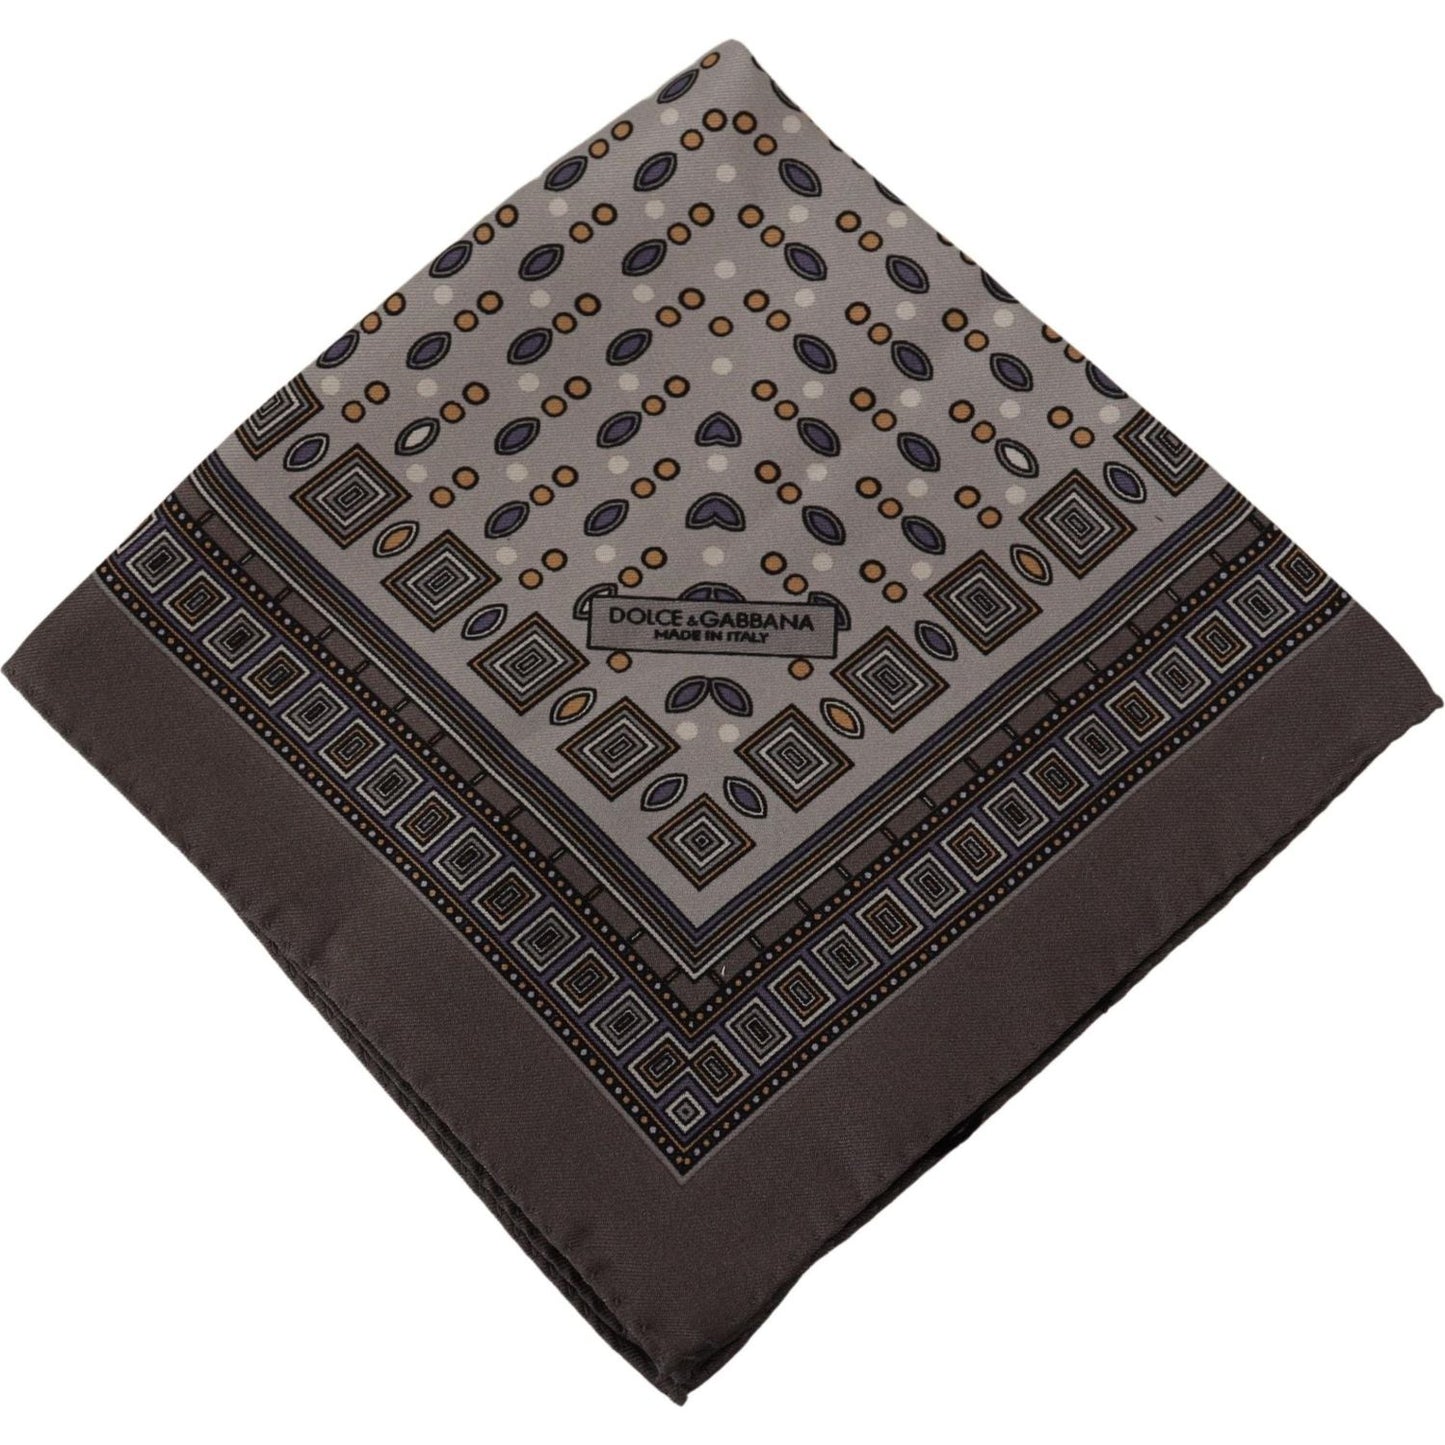 Elegant Silk Pocket Square in Rich Brown